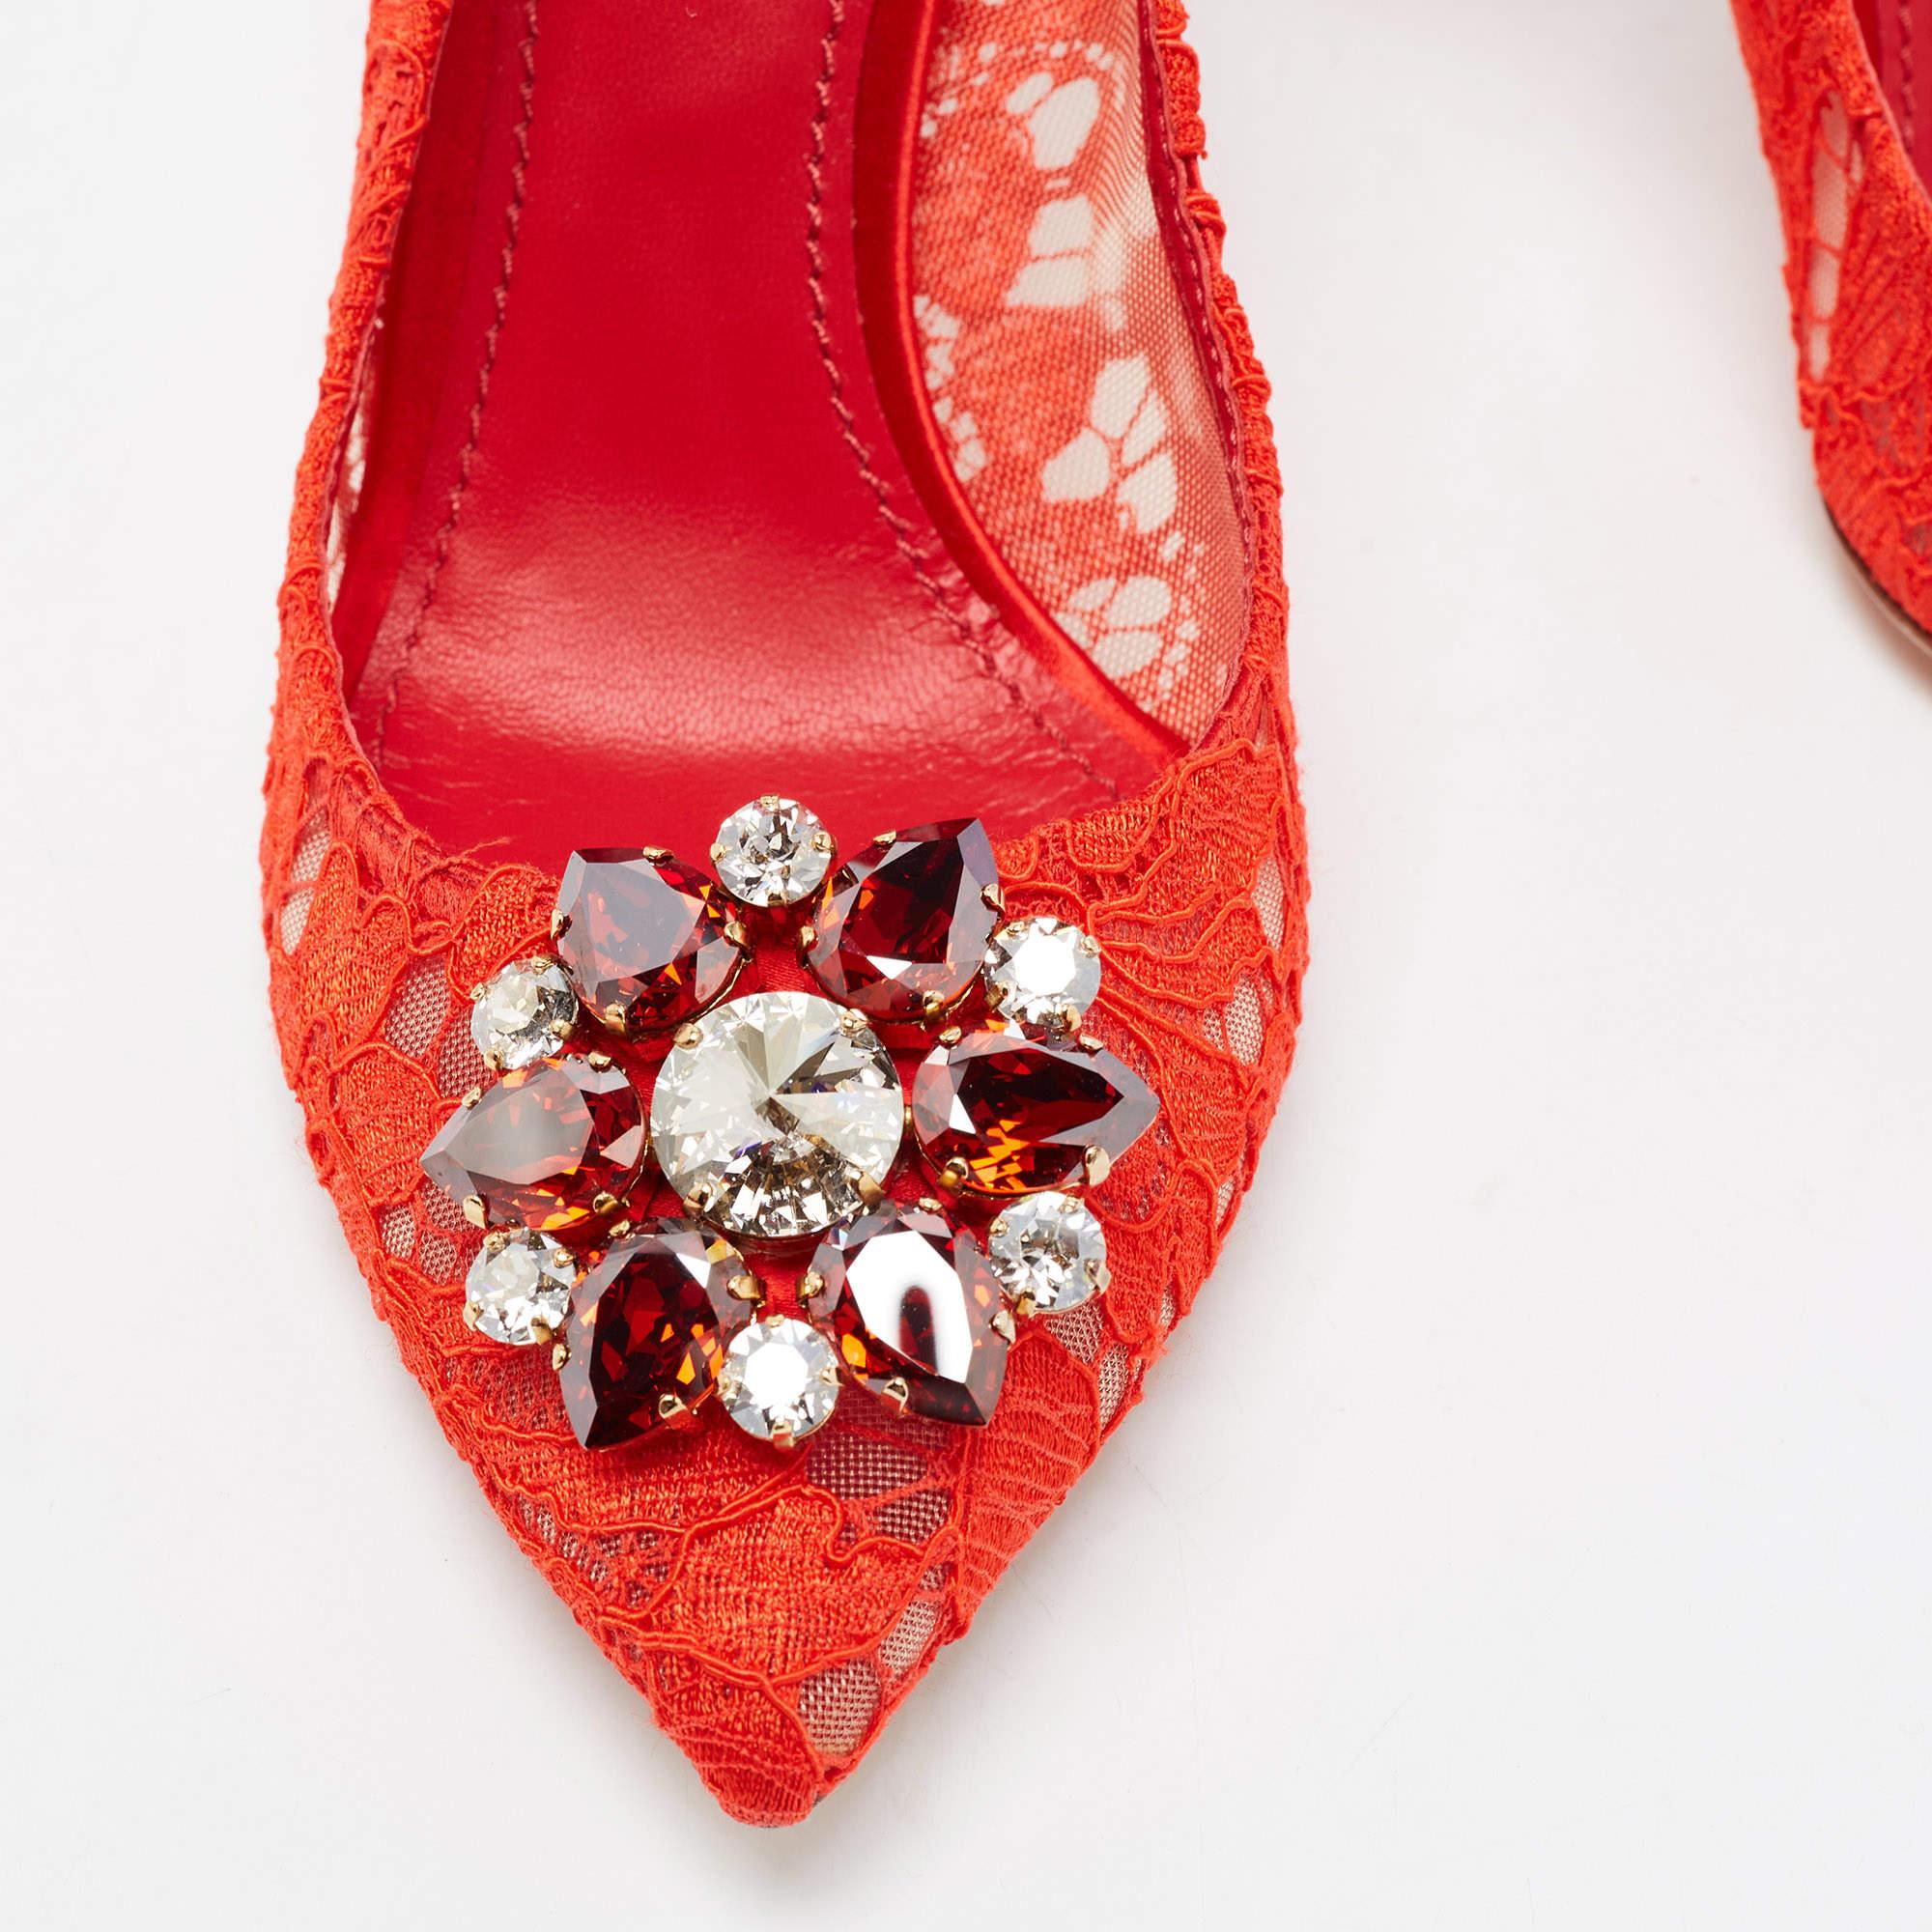 Dolce & Gabbana Red Lace Bellucci Pumps Size 40.5 1